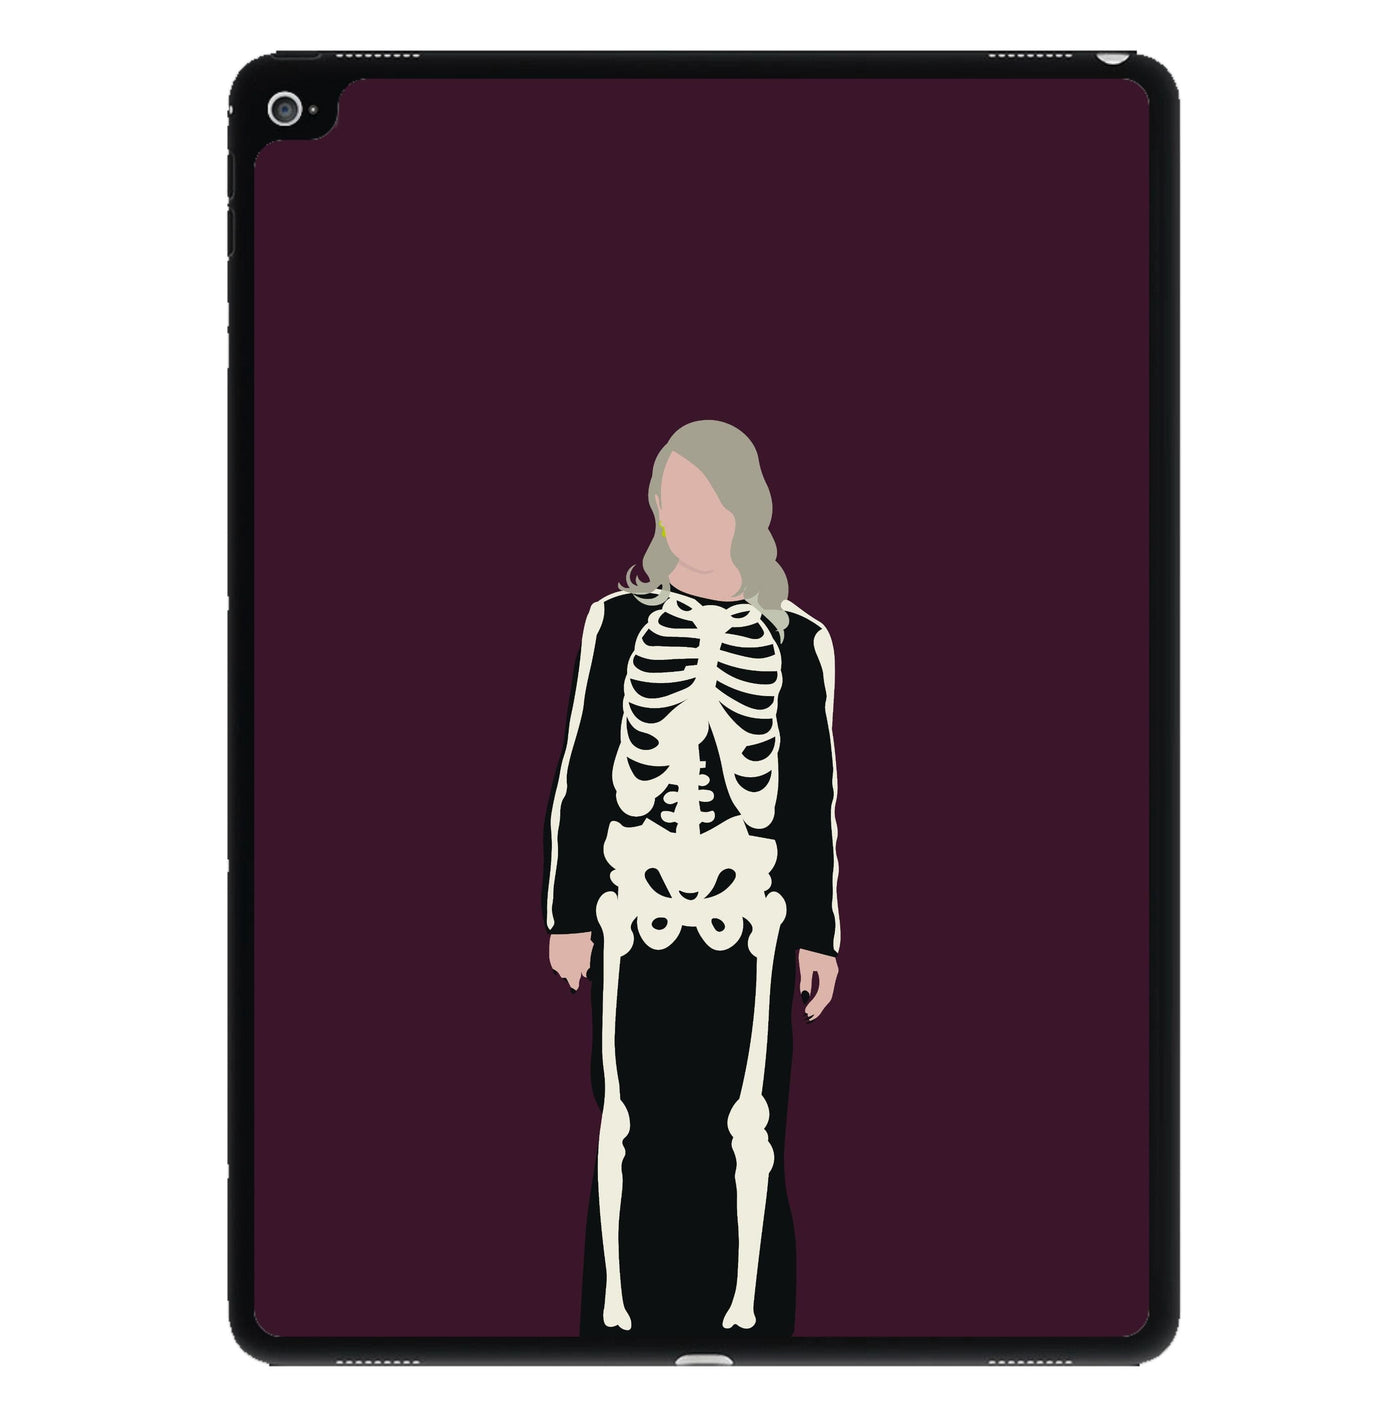 Skeleton - Phoebe Bridgers iPad Case